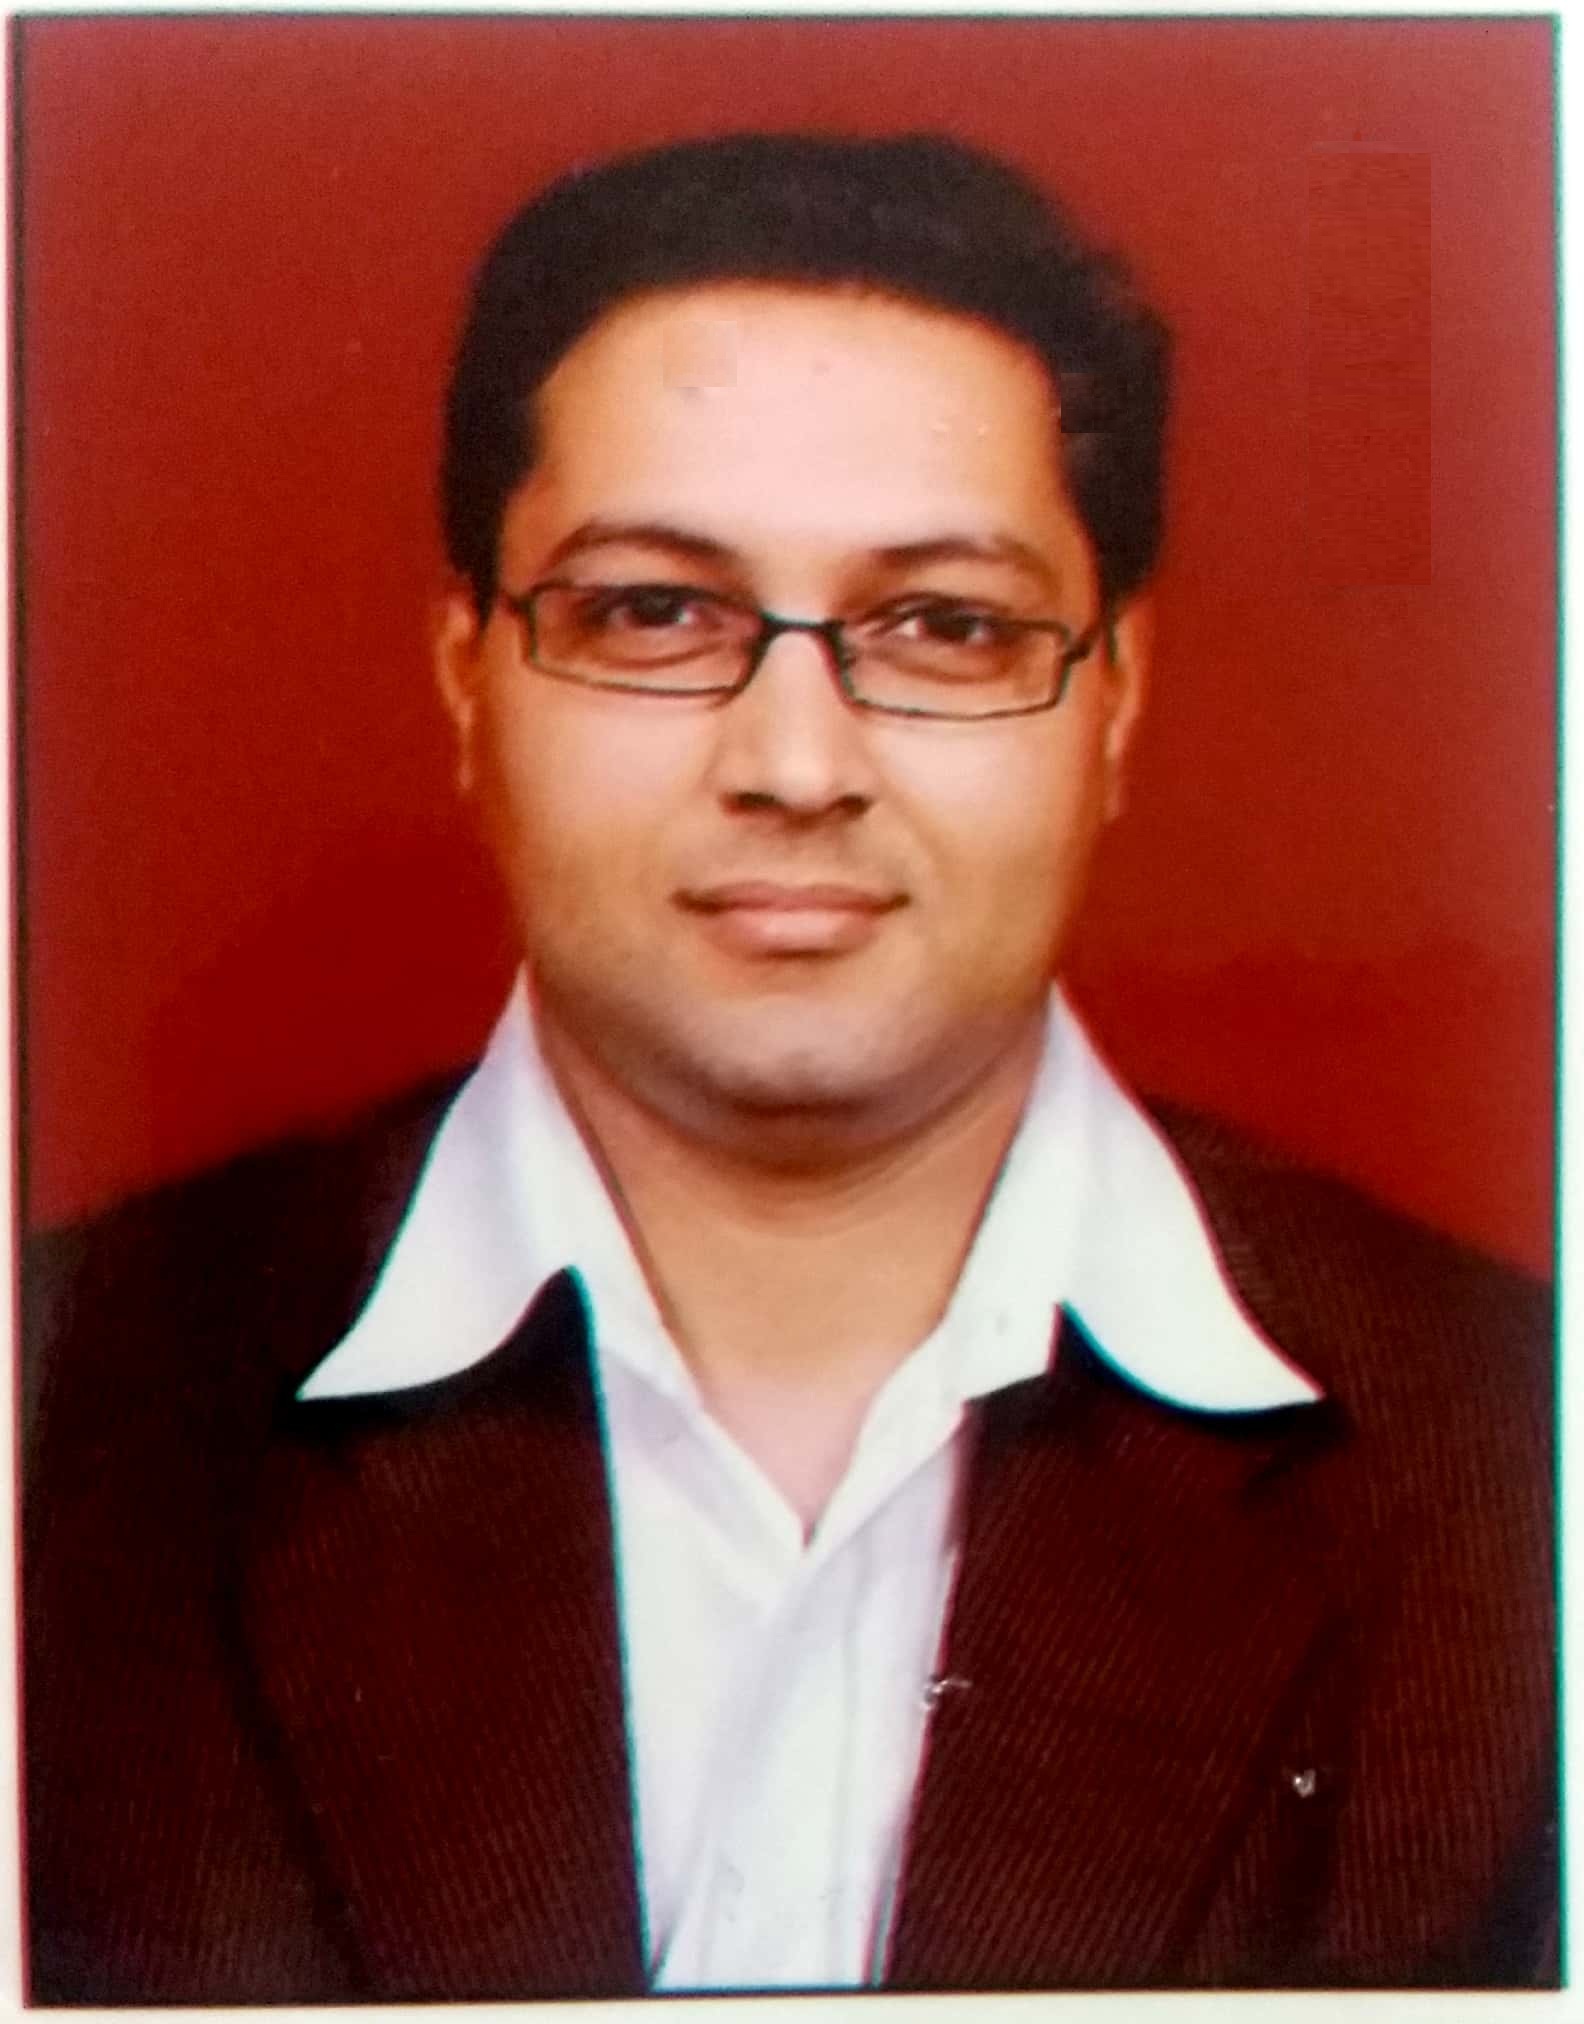 Dr Sandeep Bhagat